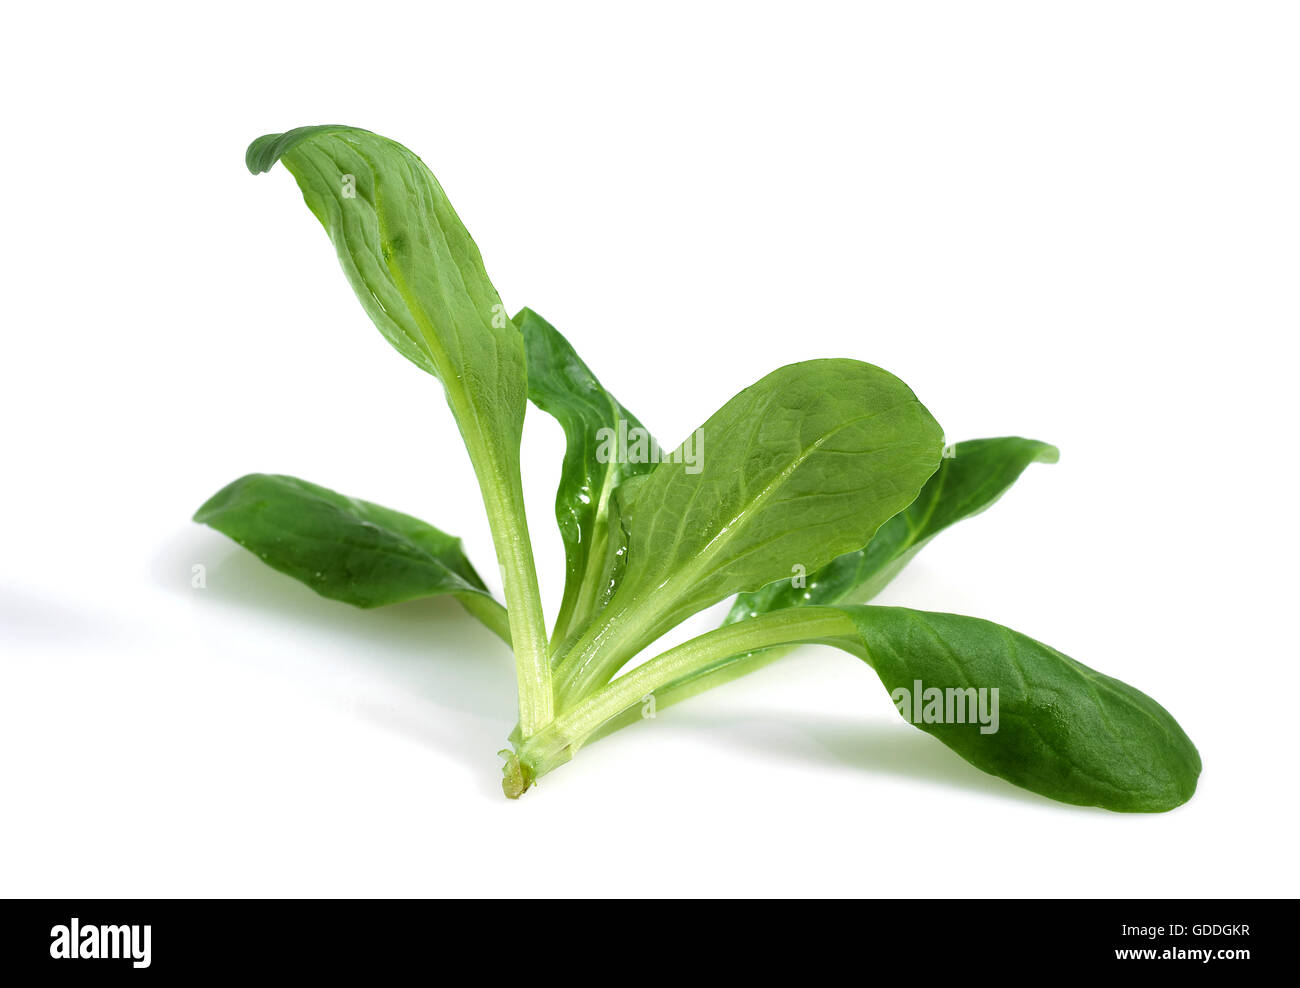 Corn Salad or Lamb's Lettuce, valerianella olitoria against White Background Stock Photo